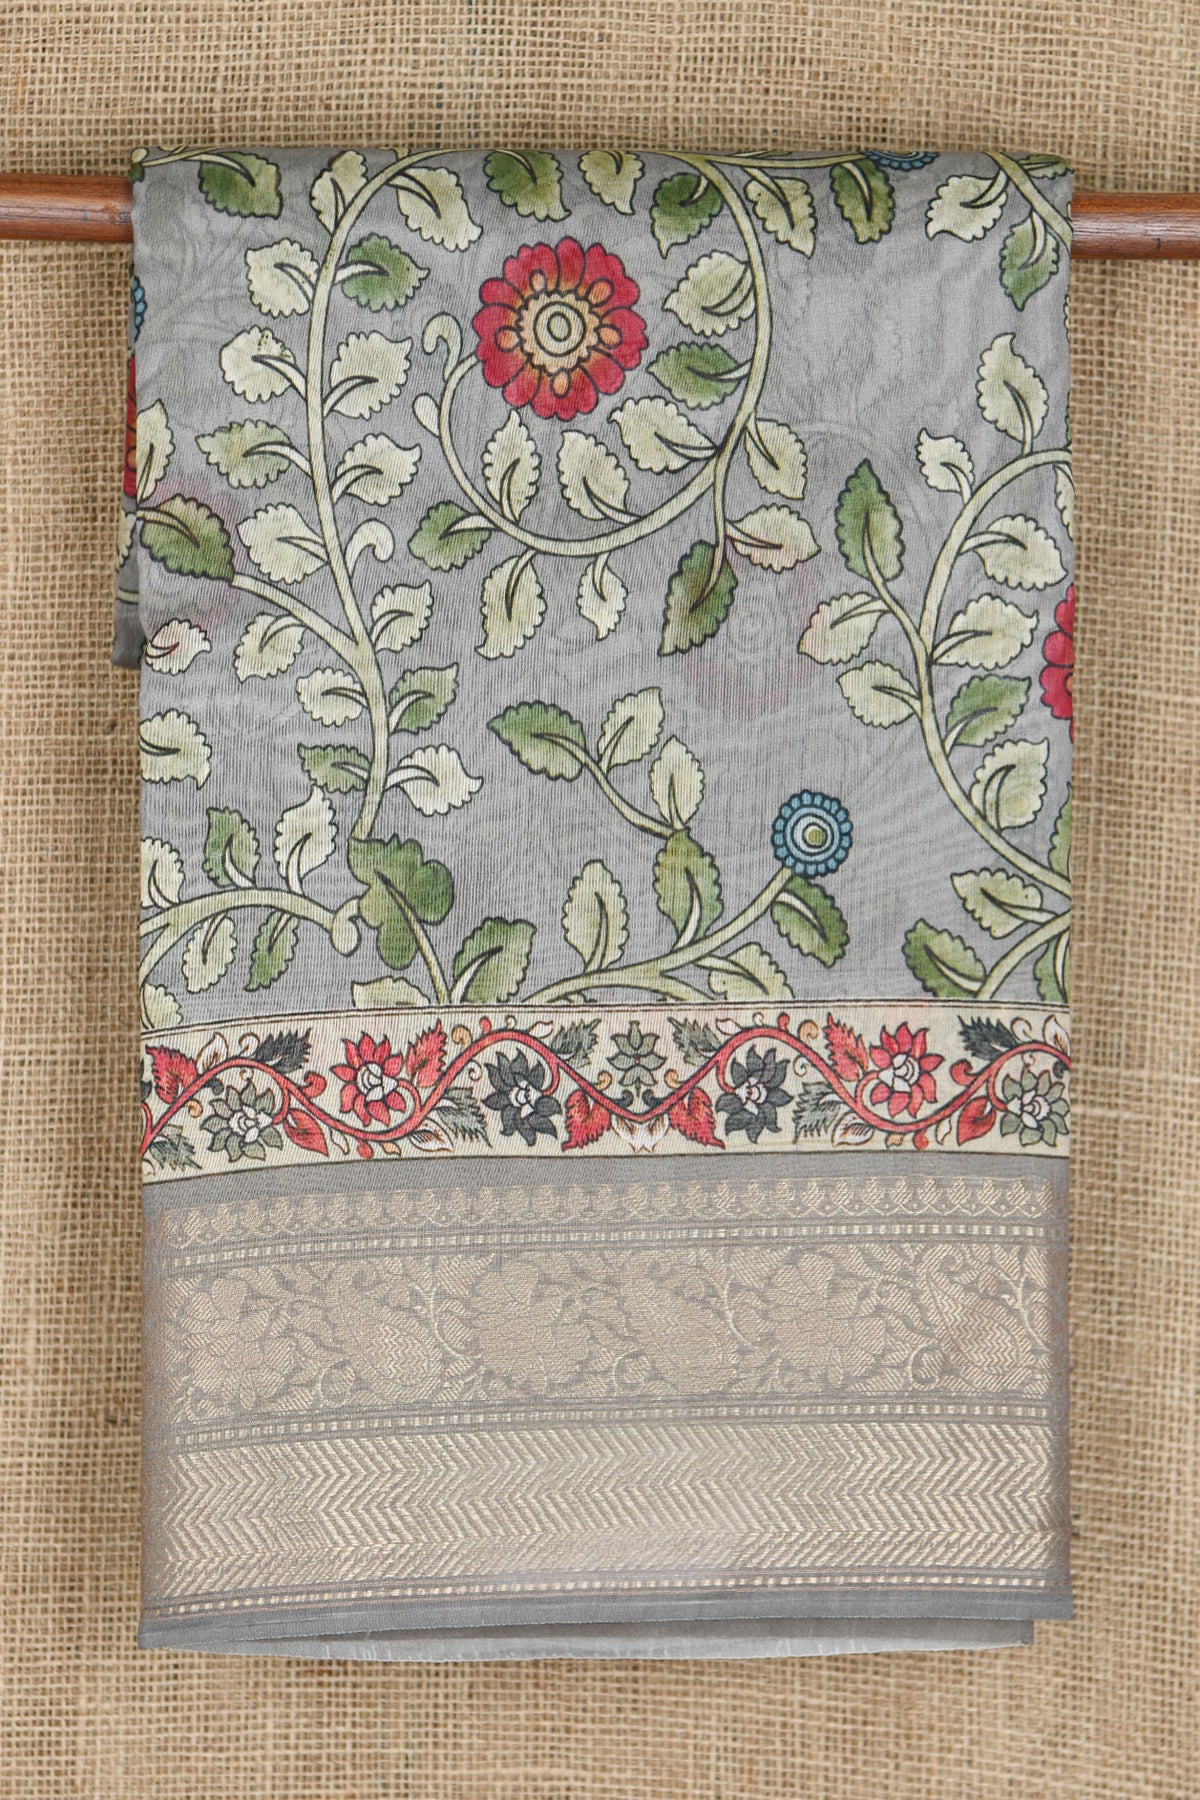 Paisley Zari Border With Digital Floral Printed Grey Kalamkari Printed Chanderi Cotton Saree